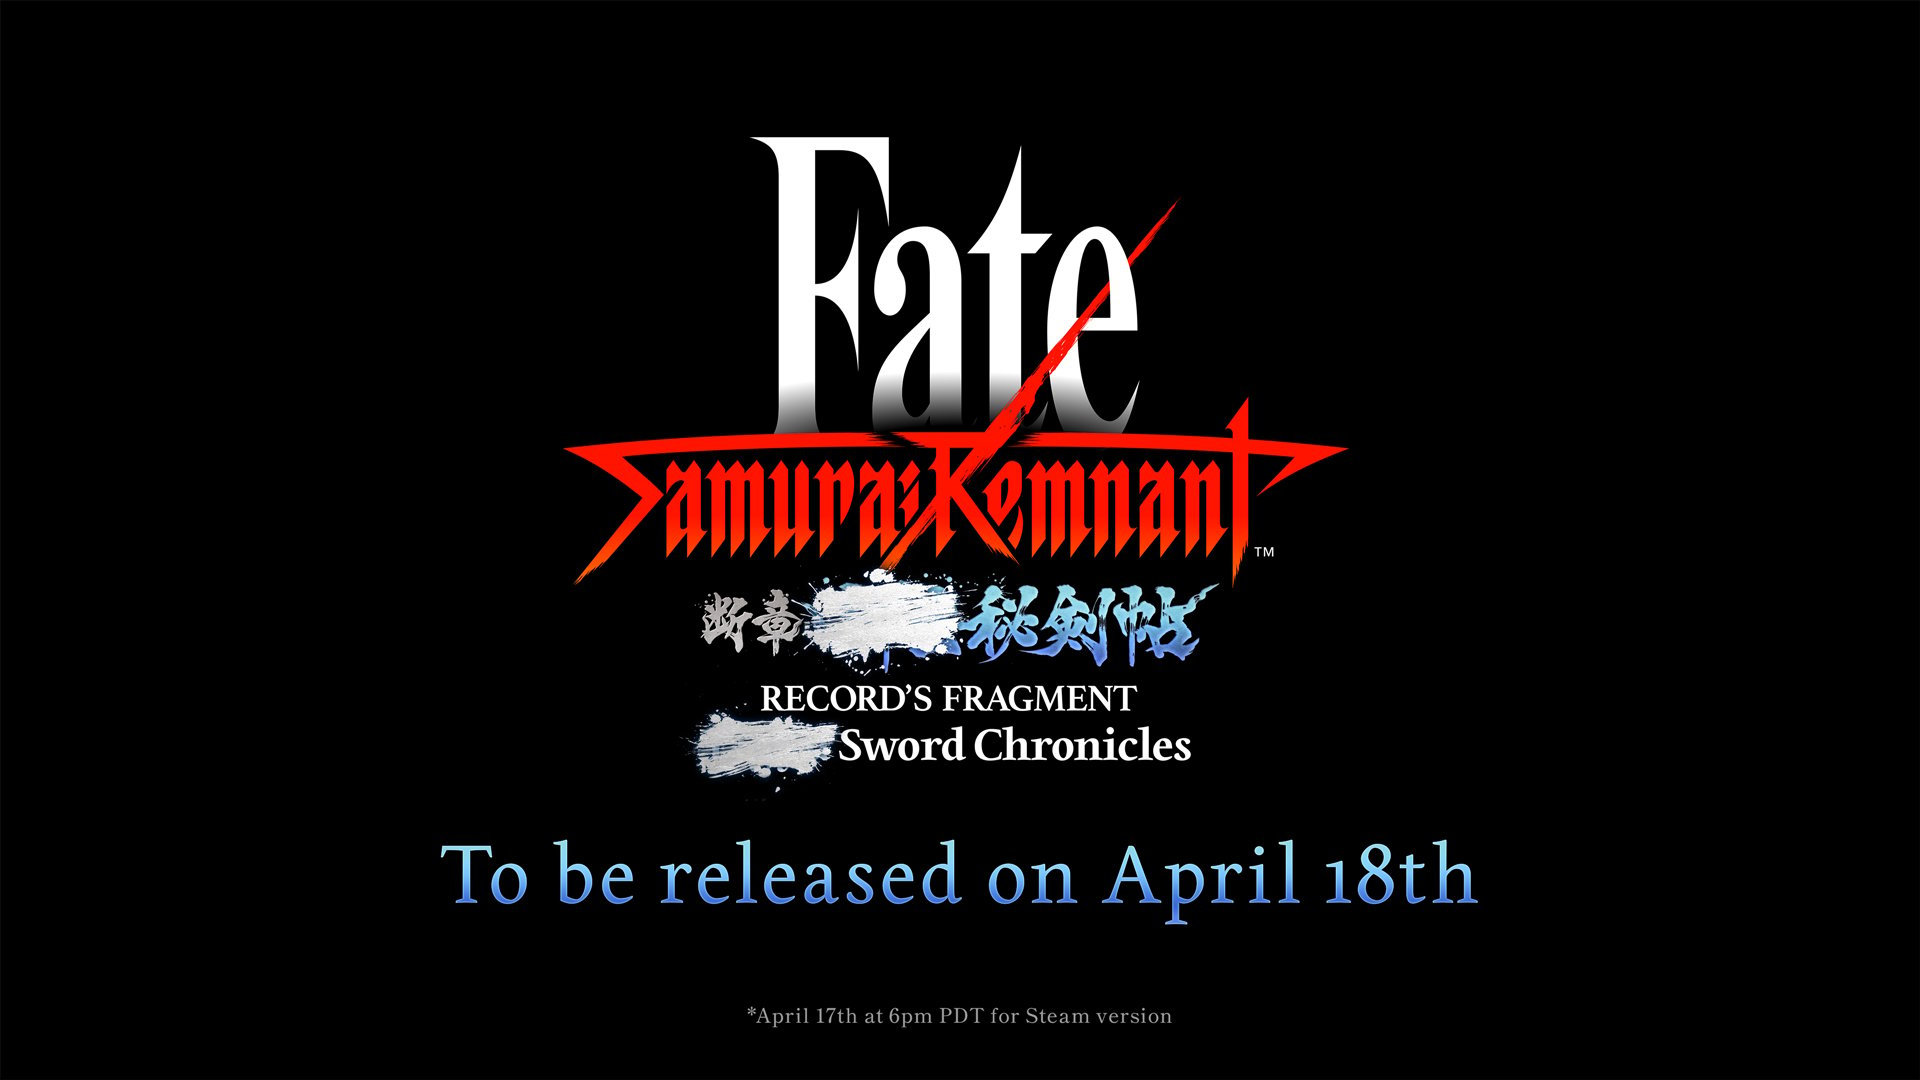 #
      Fate/Samurai Remnant DLC ‘Record’s Fragment: ■■■ Sword Chronicles’ launches April 18